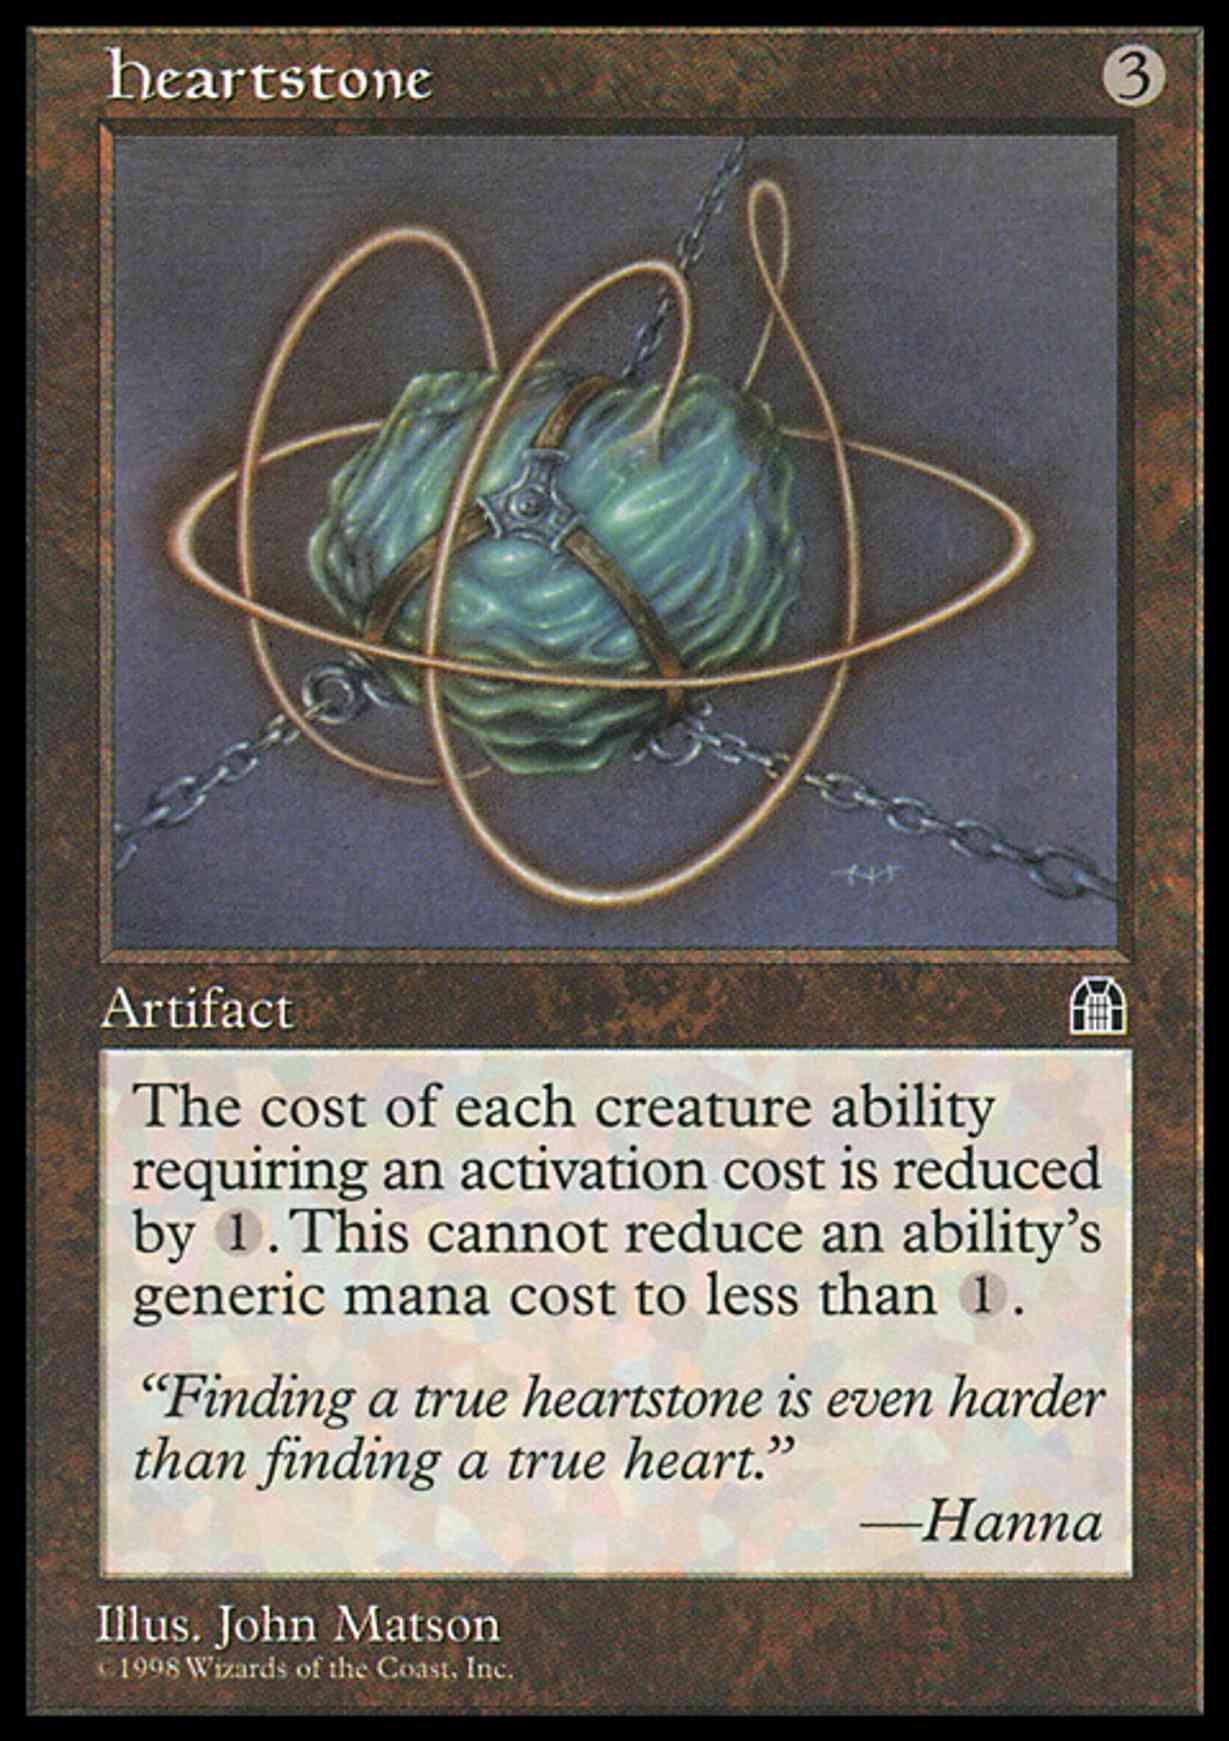 Heartstone magic card front